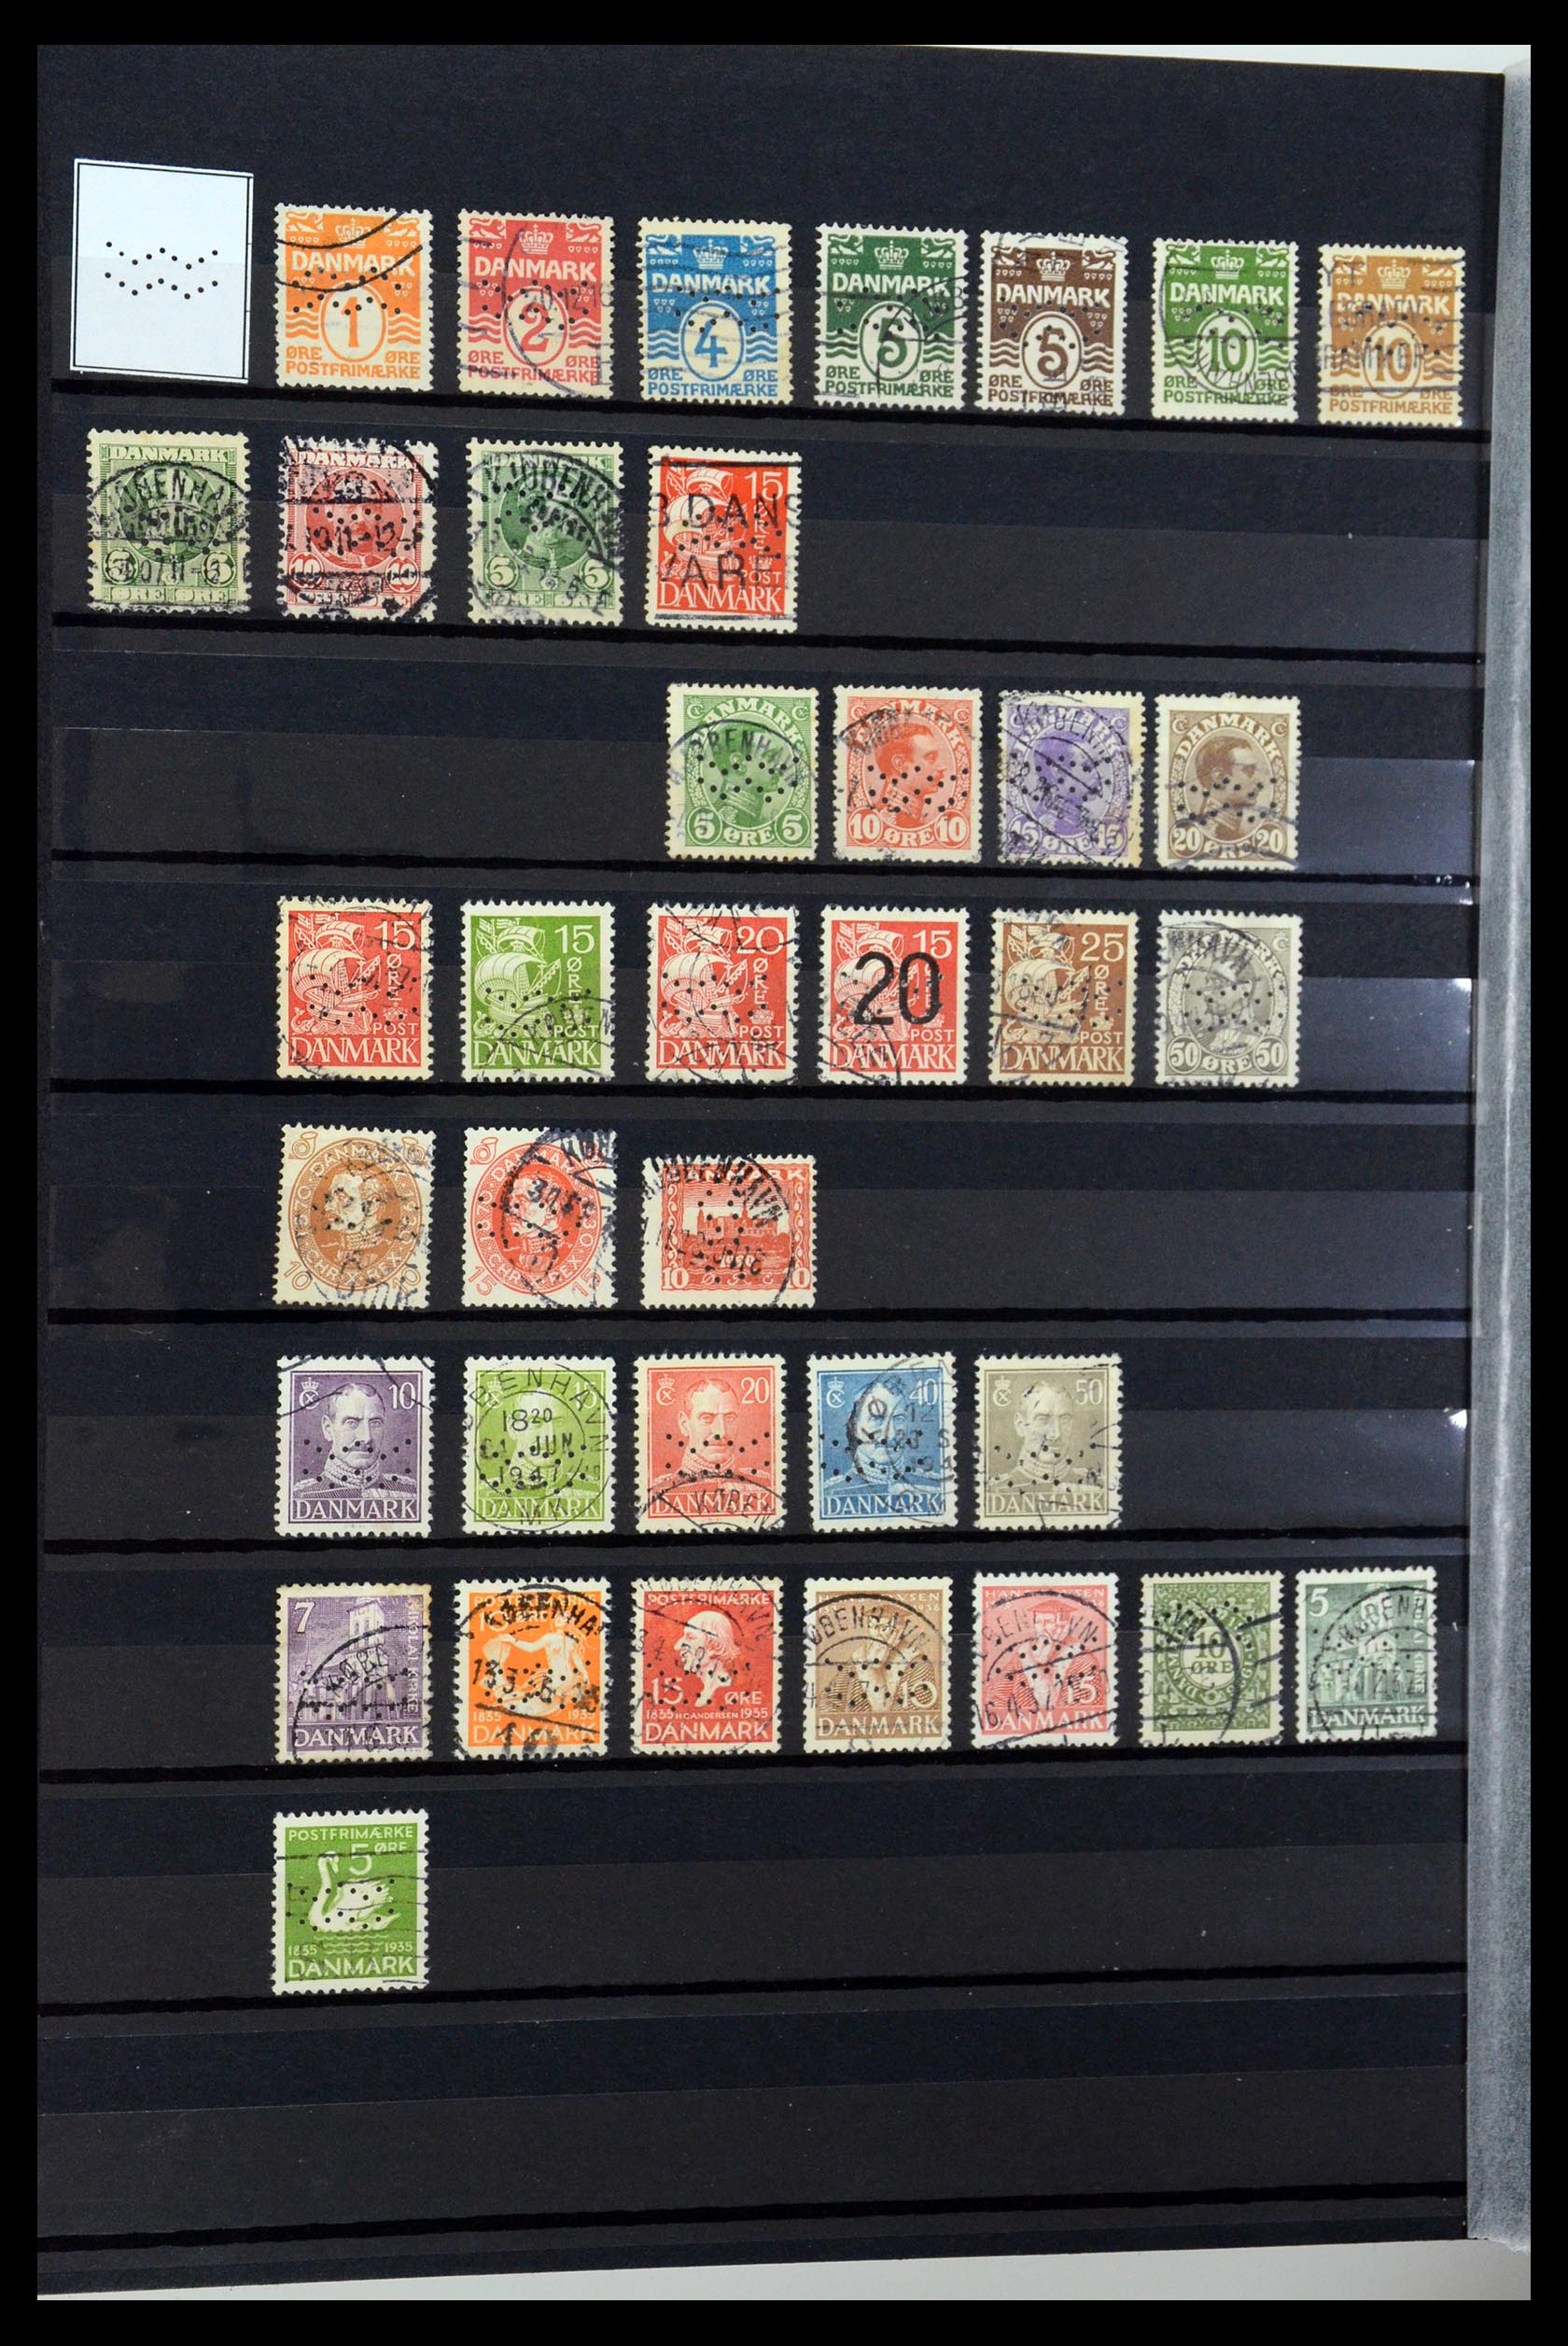 36396 230 - Stamp collection 36396 Denmark perfins.